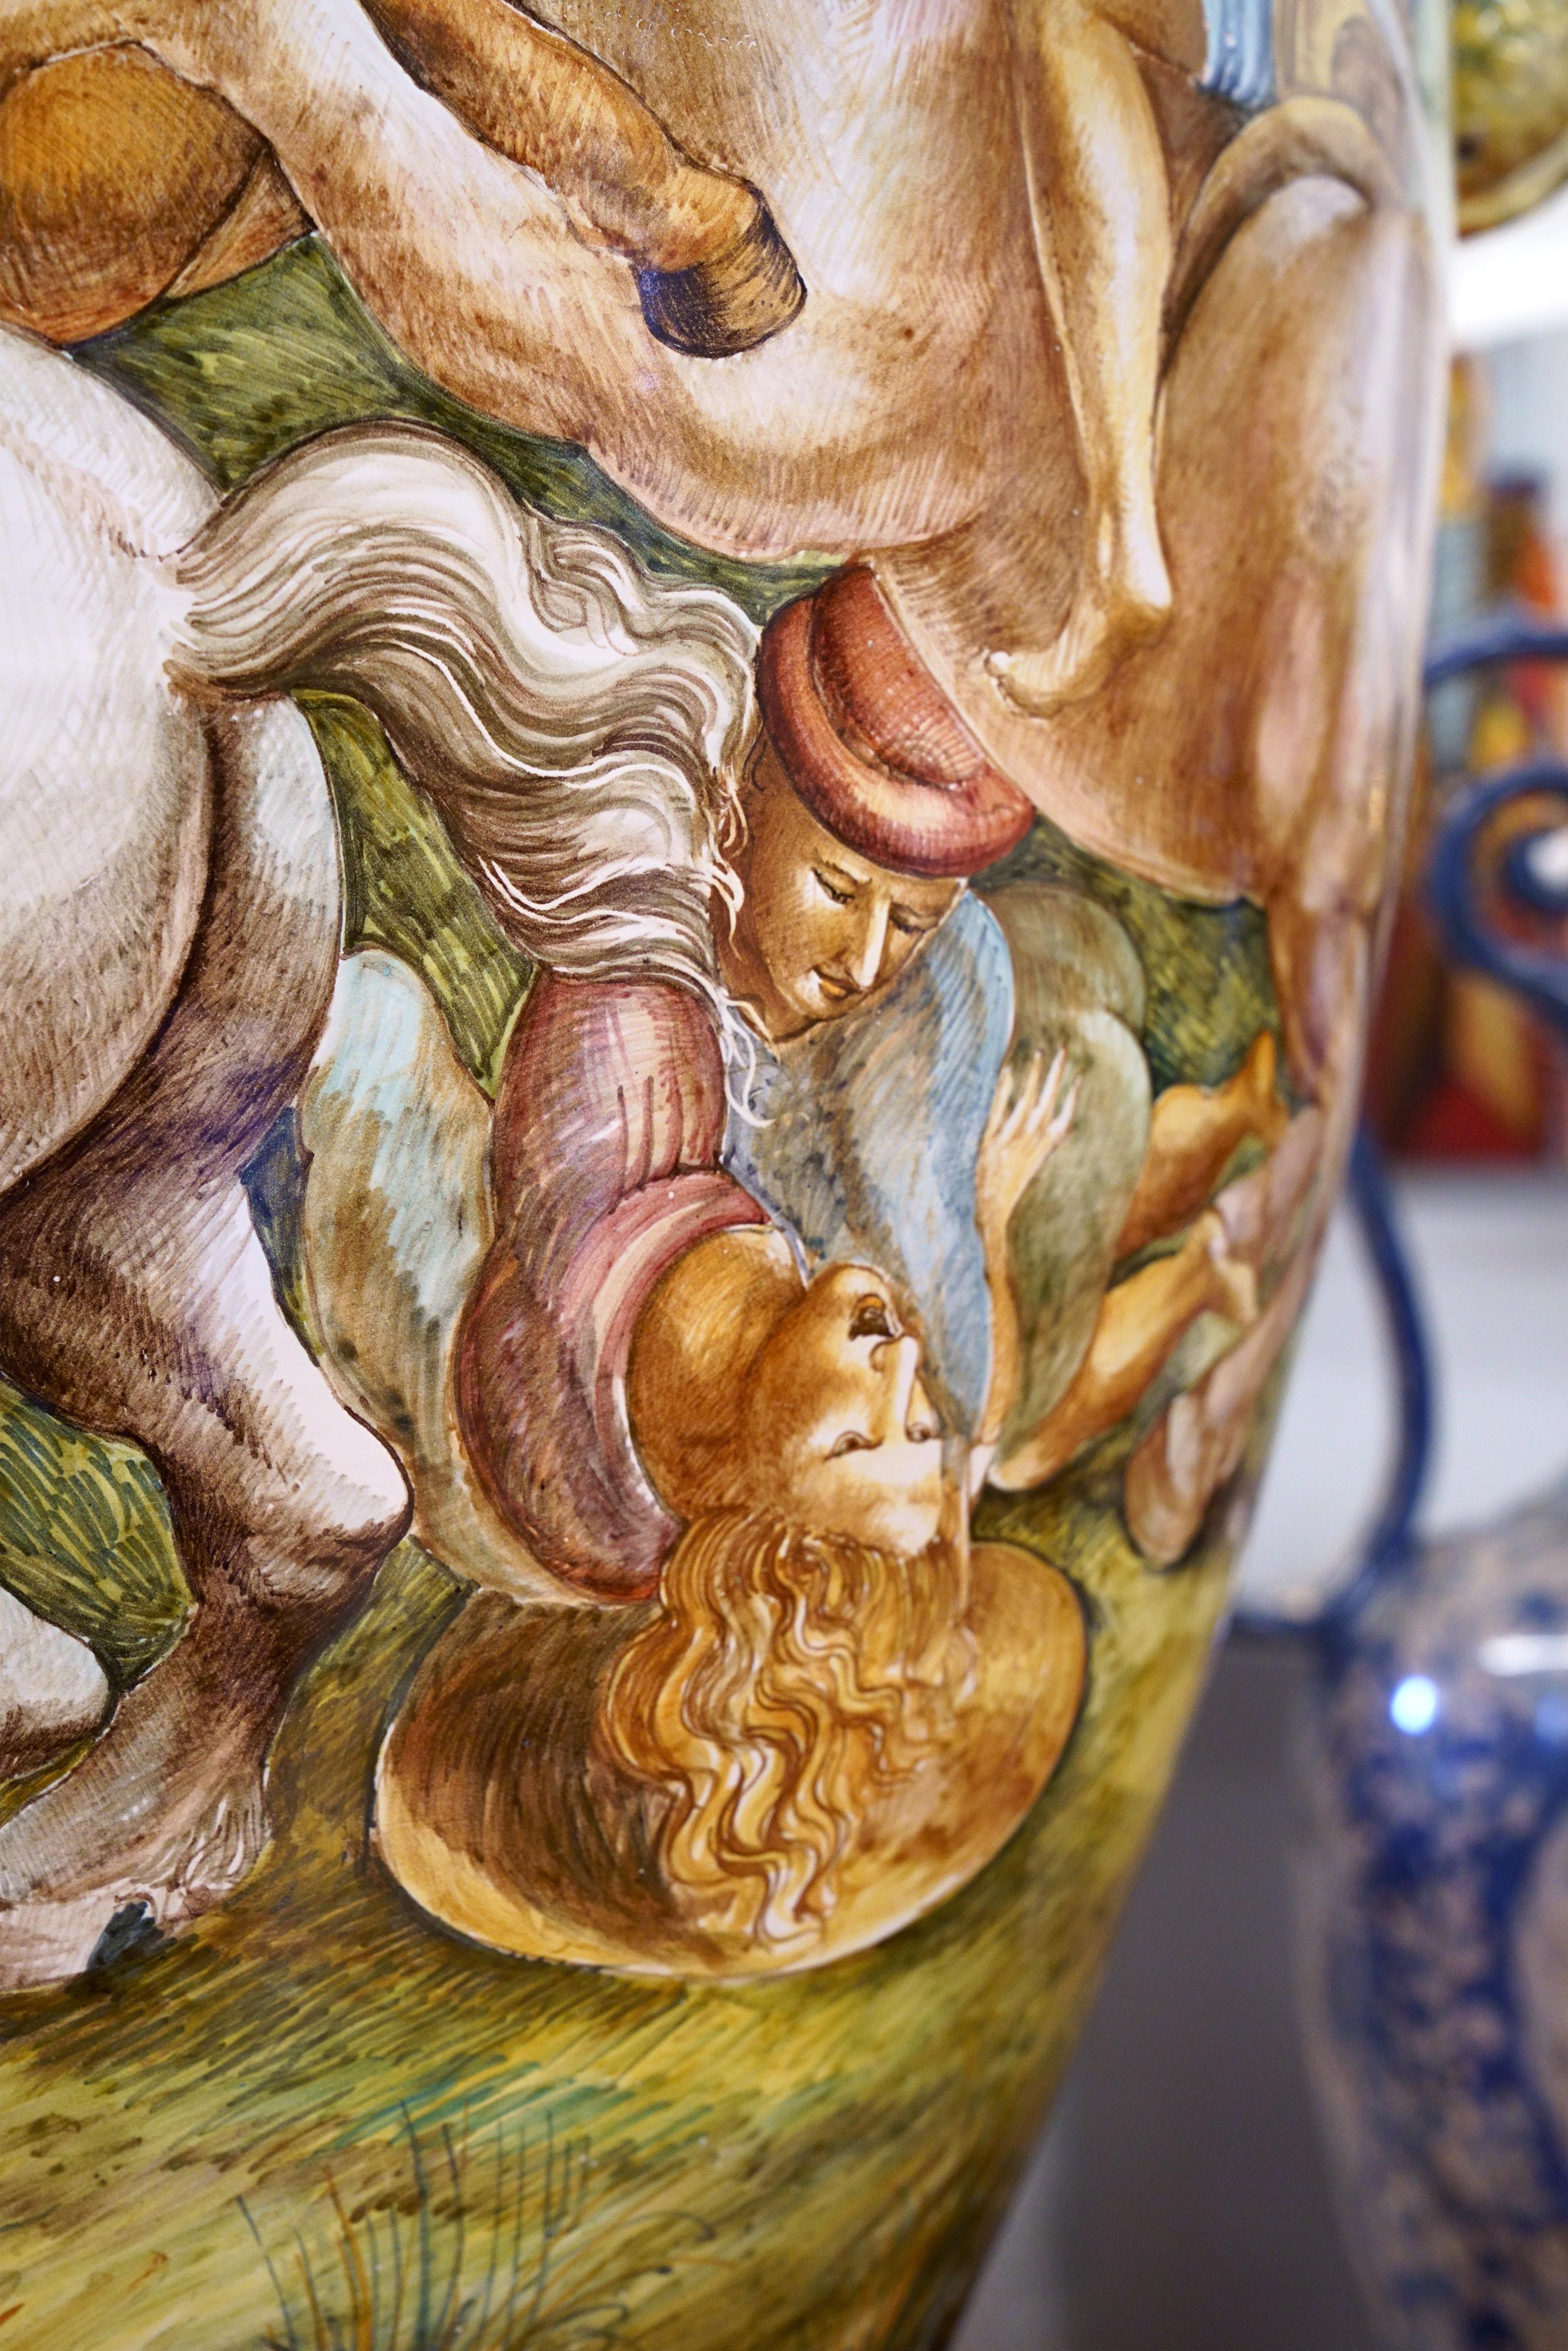 Late 20th Century Majestic Amphora Vase Majolica Painted Subject Inspired by Leonardo Da Vinci For Sale